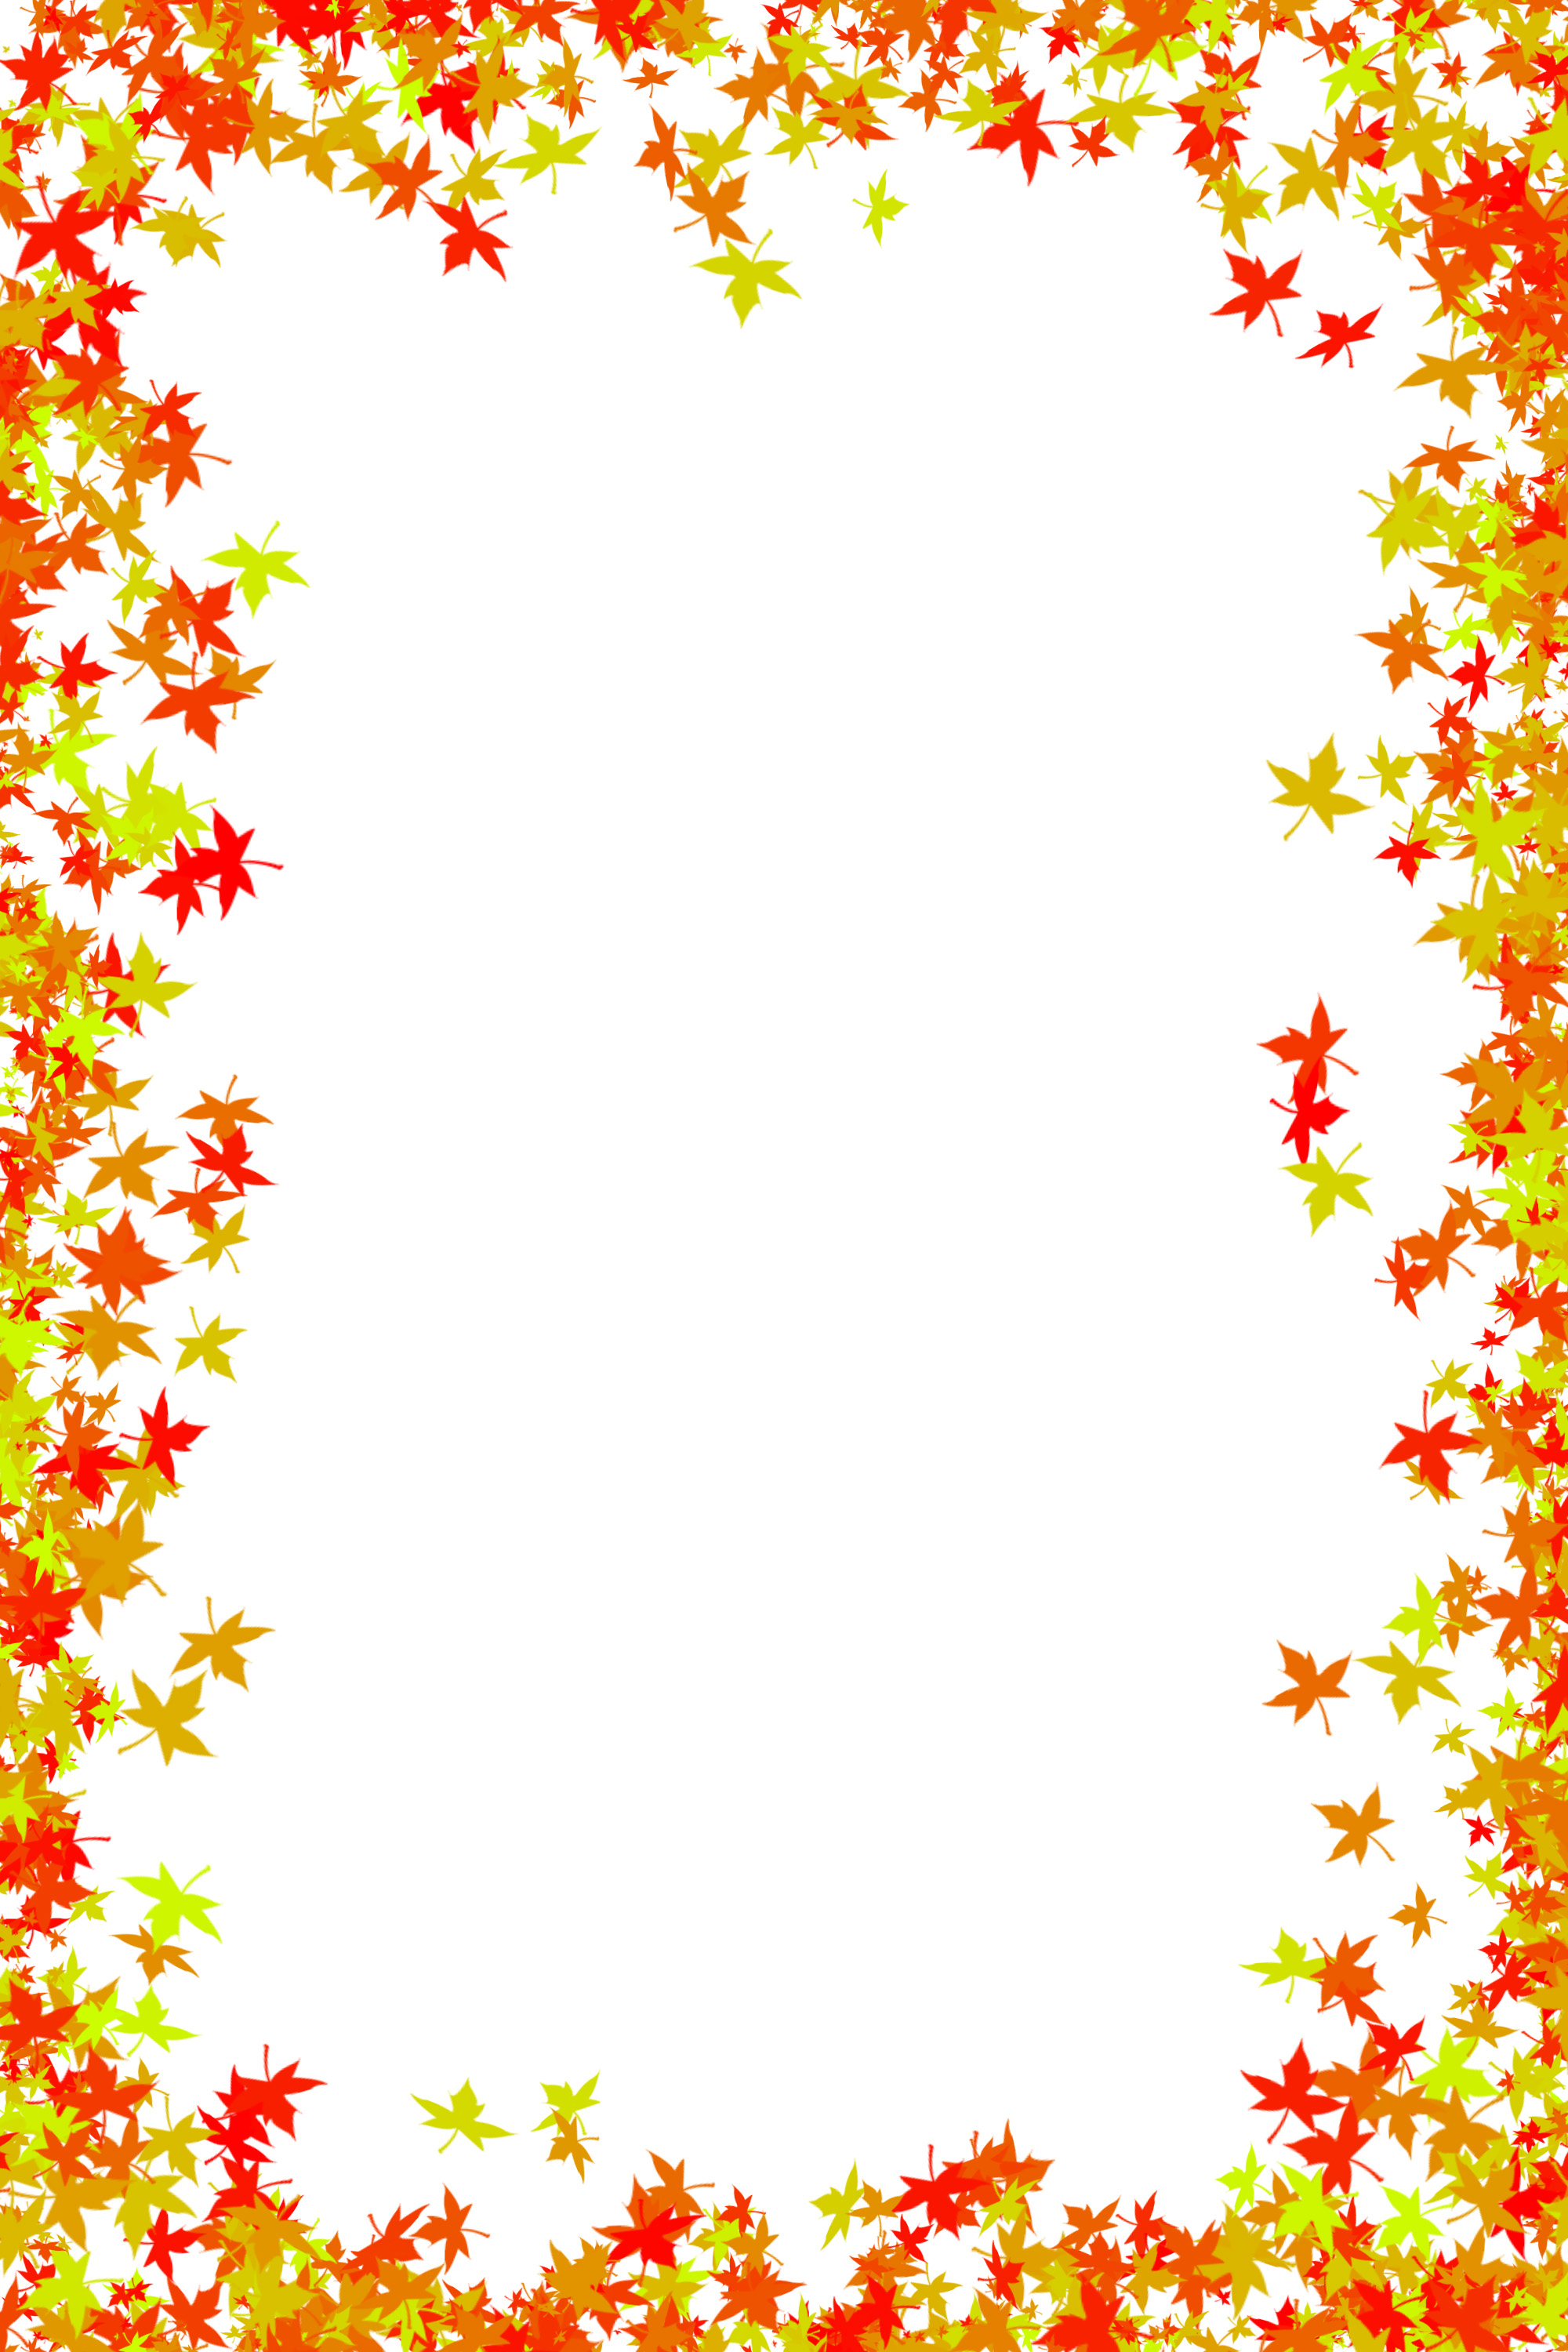 Fall border autumn clip art borders clipart for you image jpg